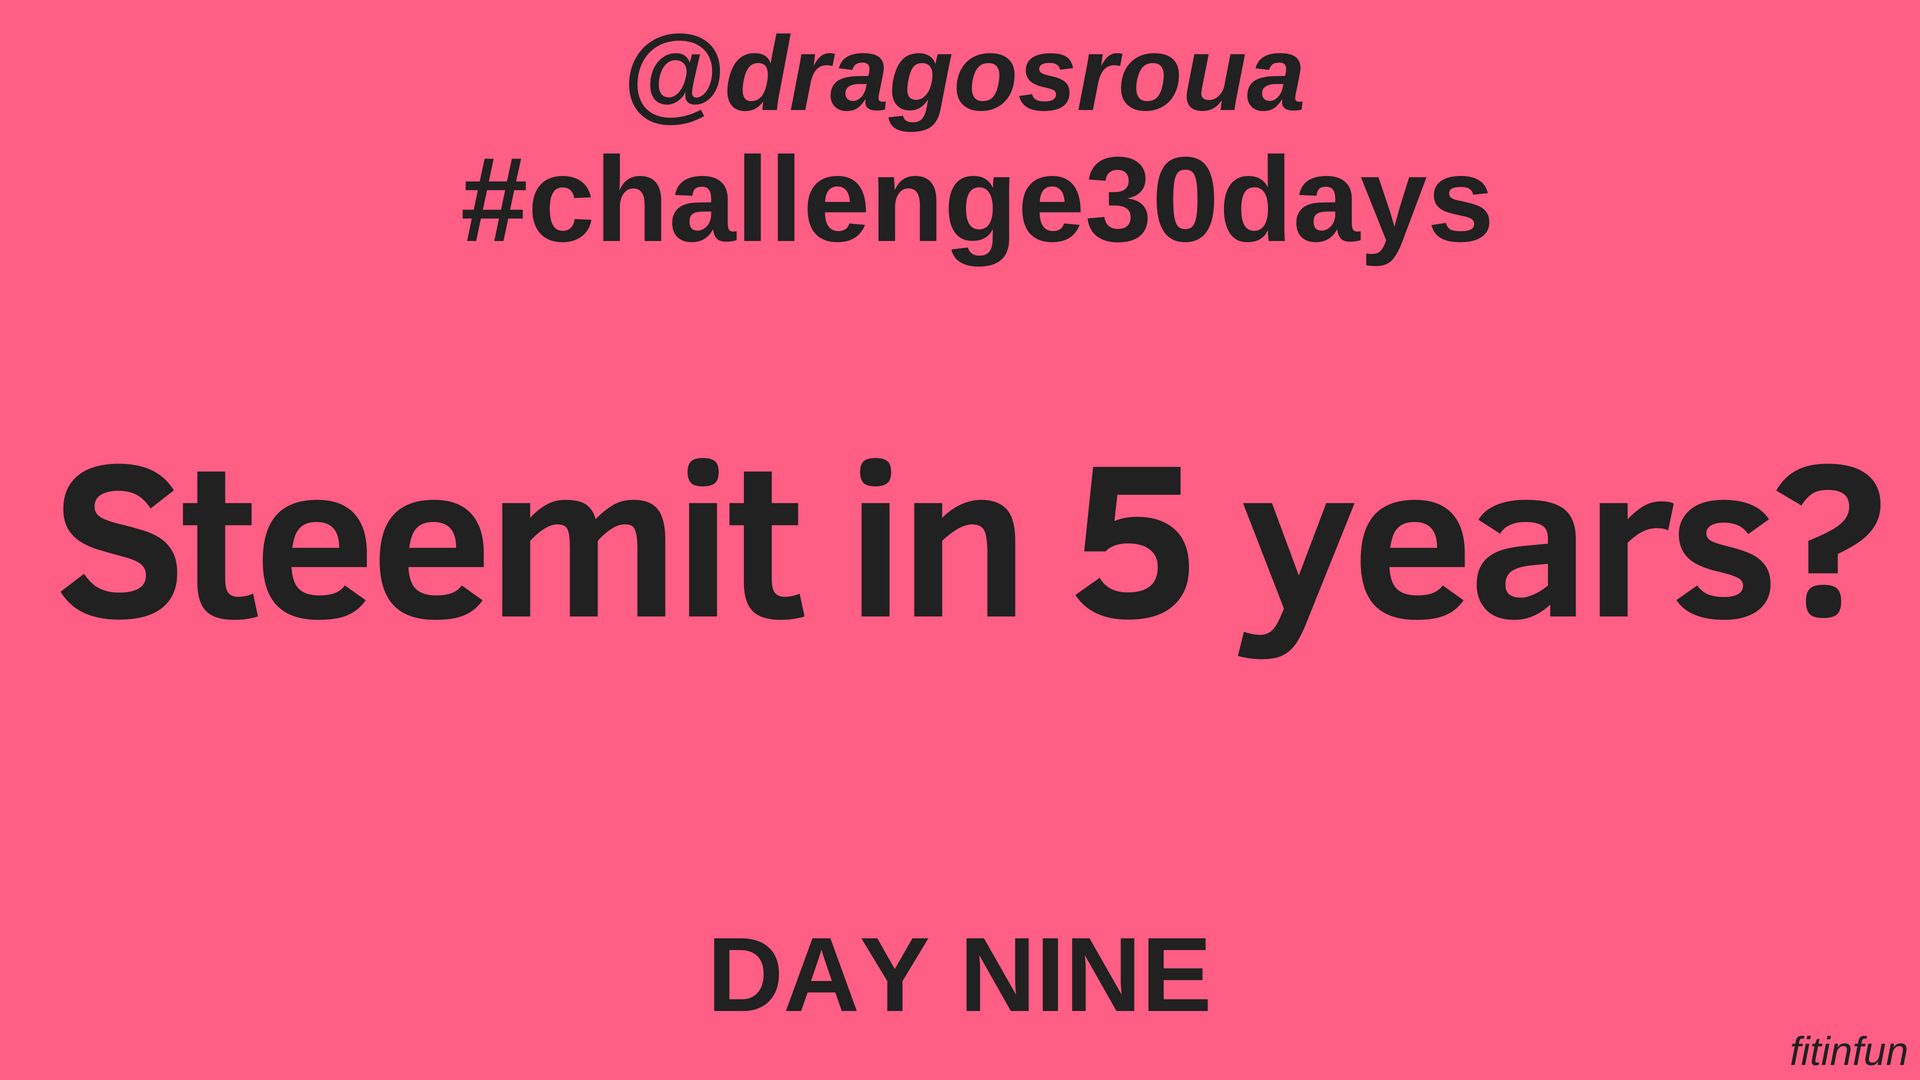 Steemit in 5 years dragosroua challenge fitinfun 9.jpg